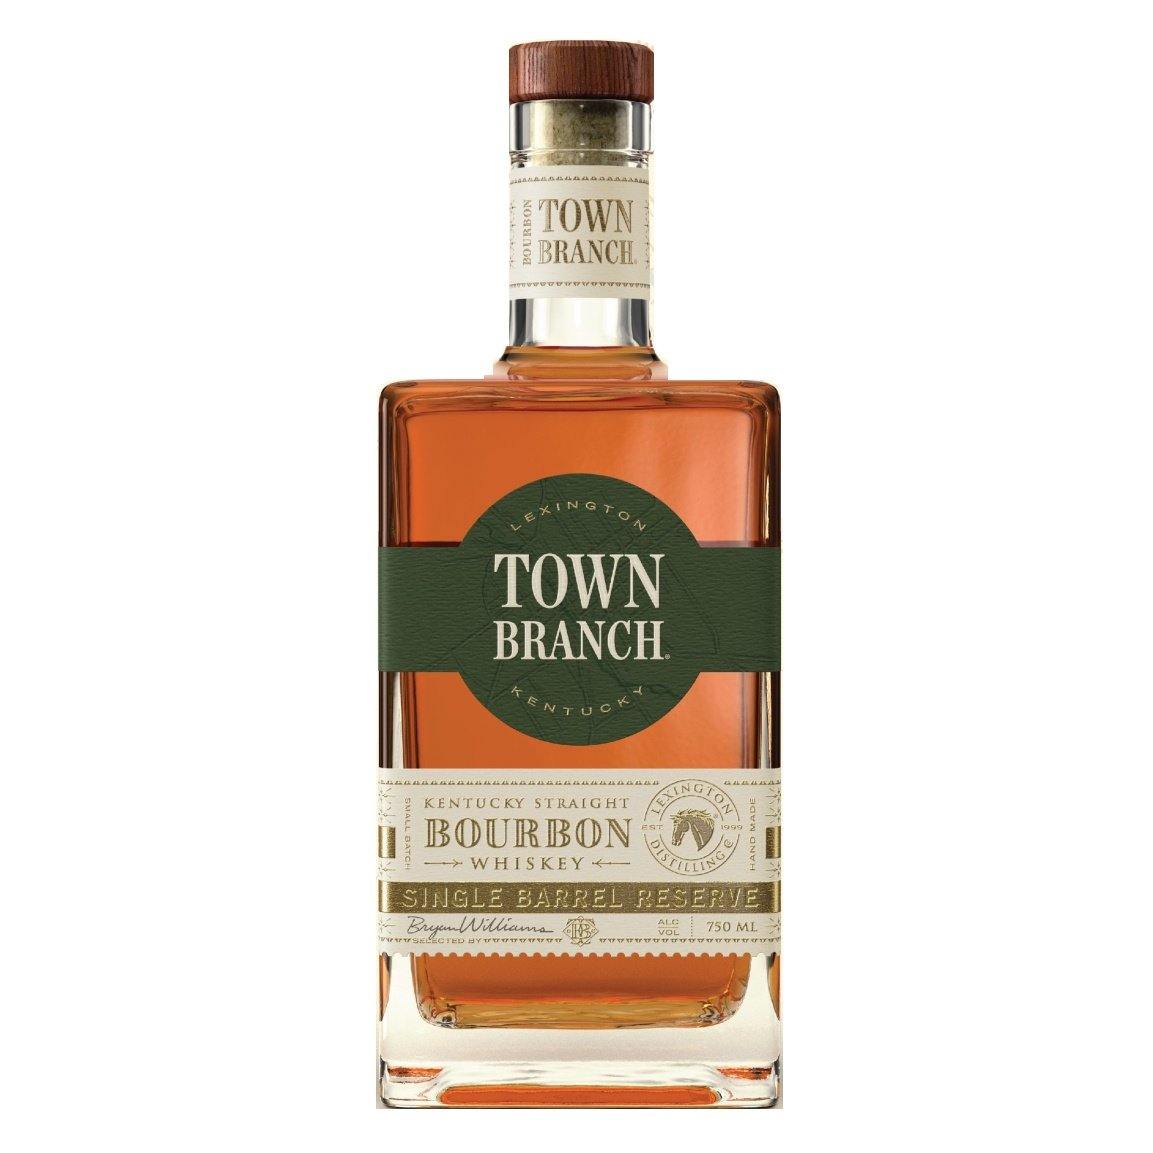 Town Branch Single Barrel Reserve Kentucky Straight Bourbon Whiskey 750ml